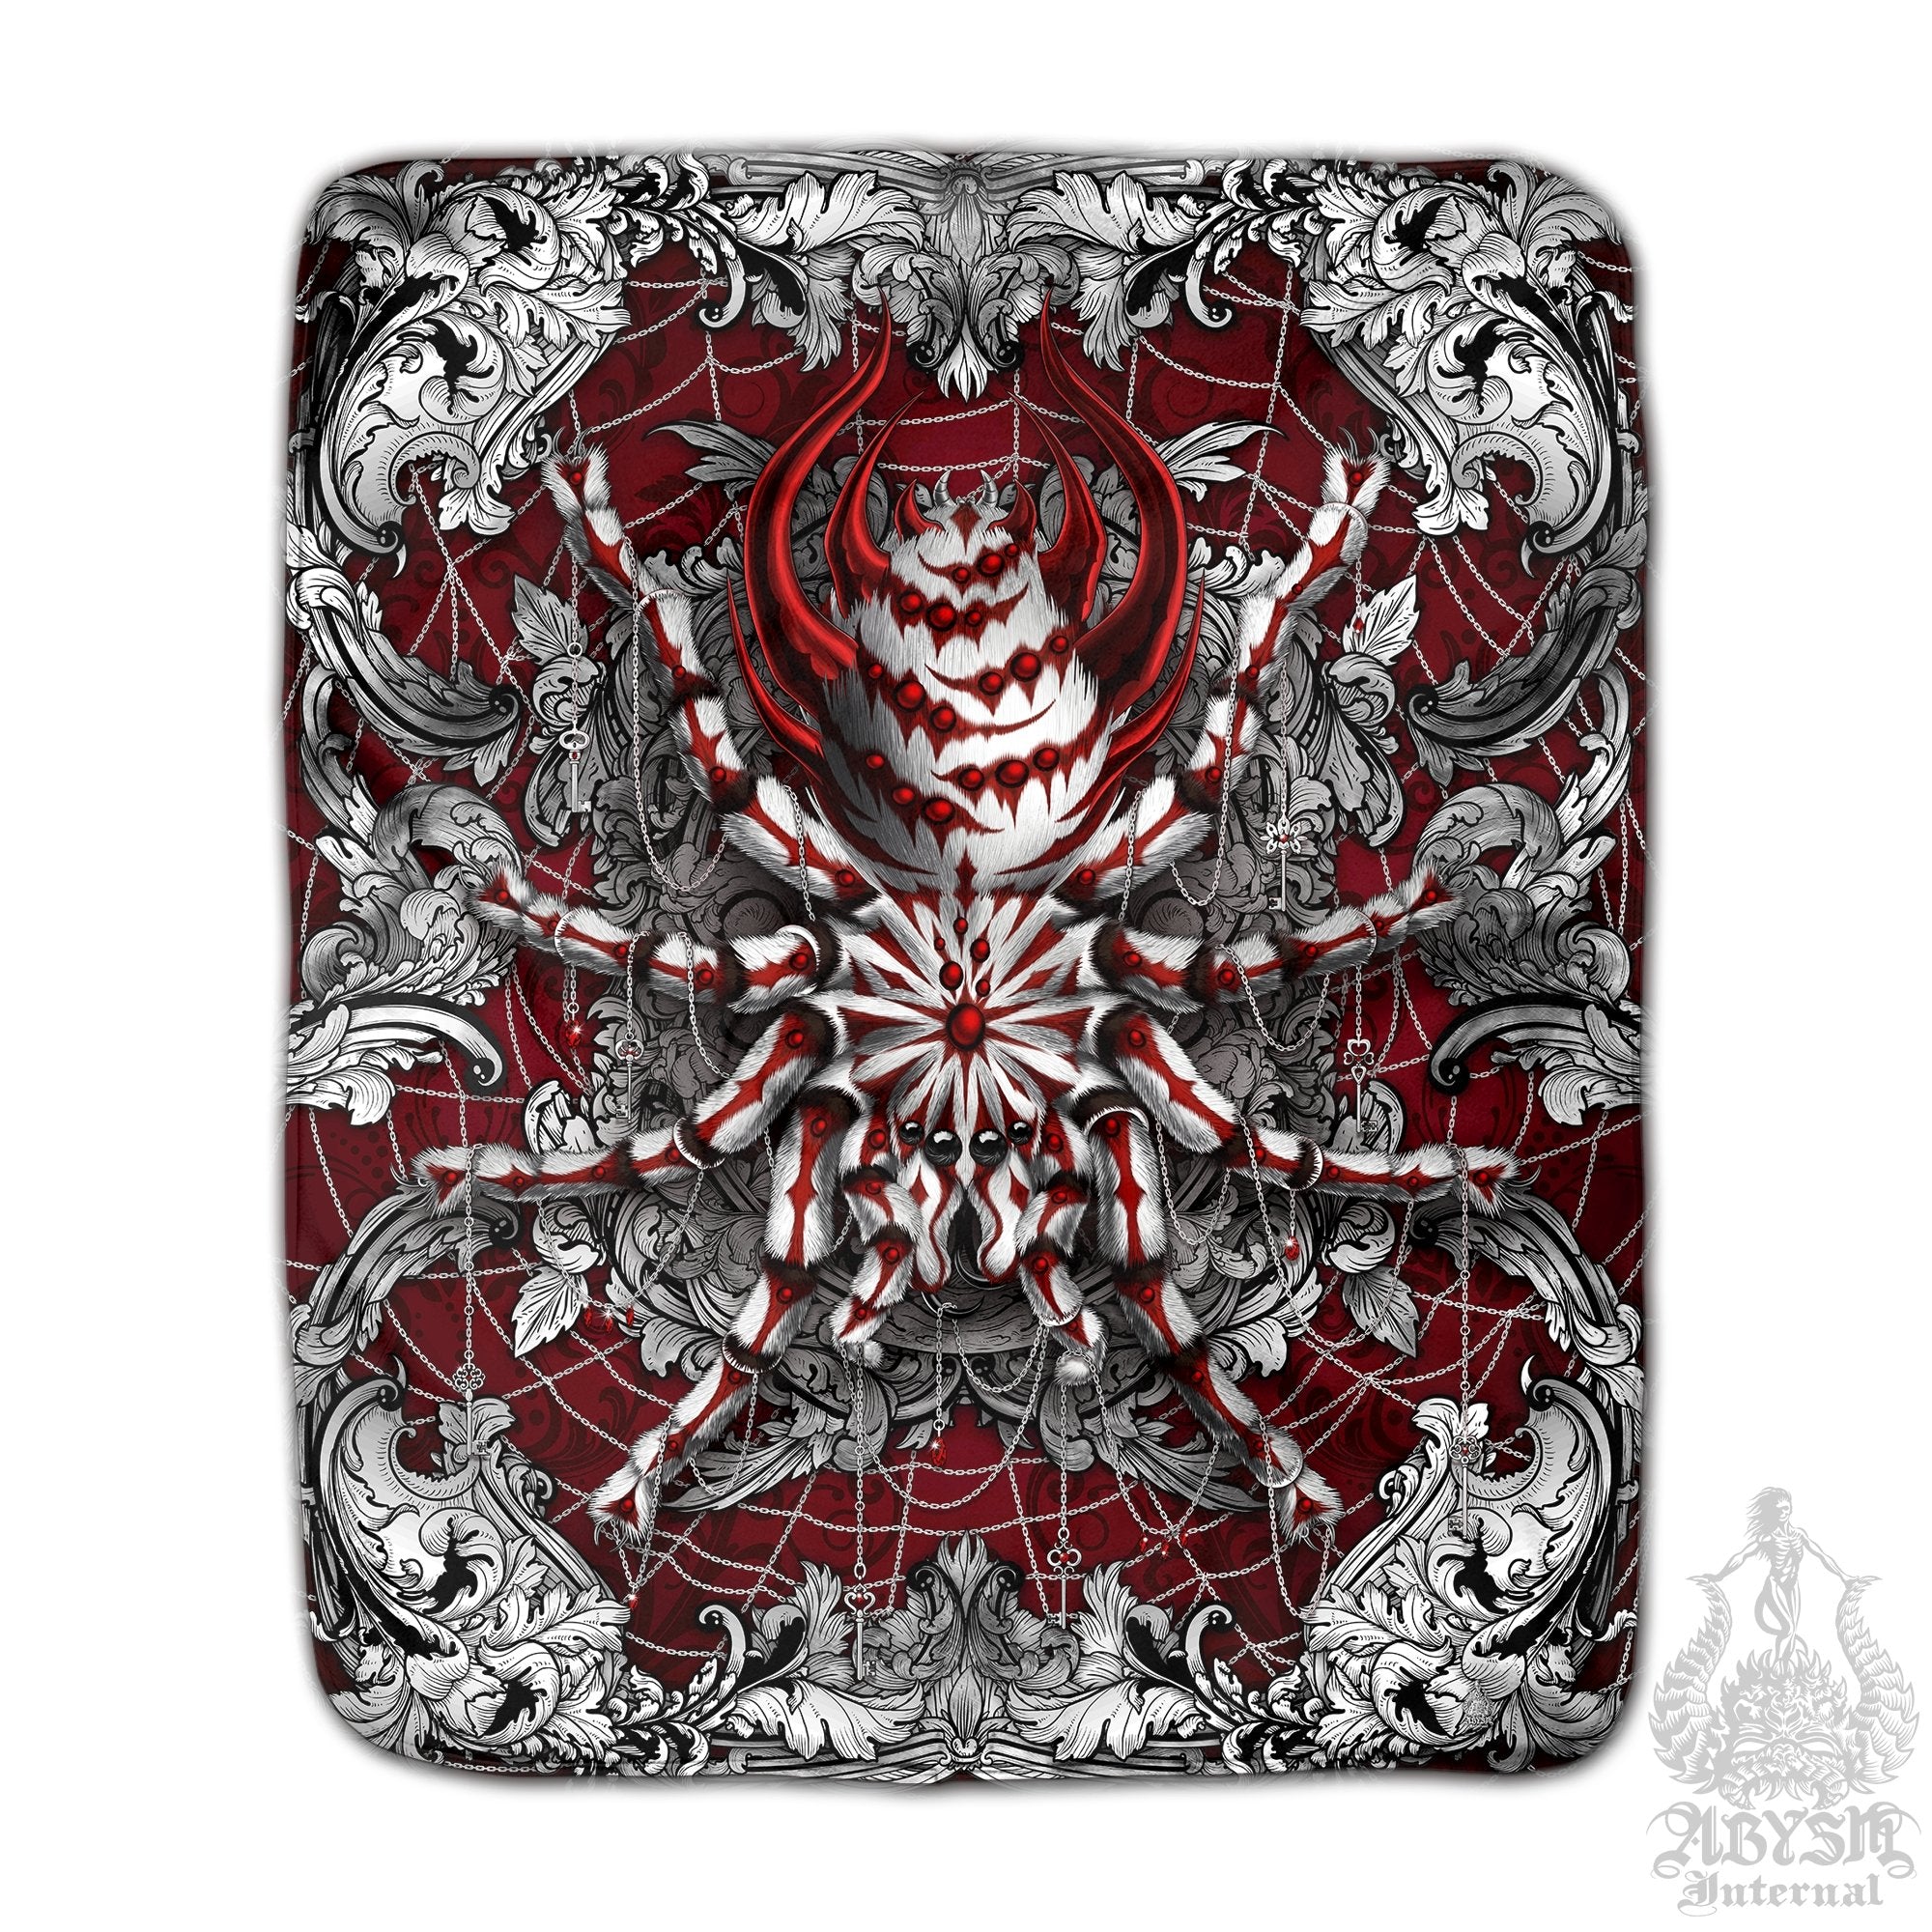 Spider Throw Fleece Blanket, Alternative Home Decor, Unique Gift - Silver Red, Tarantula Art - Abysm Internal